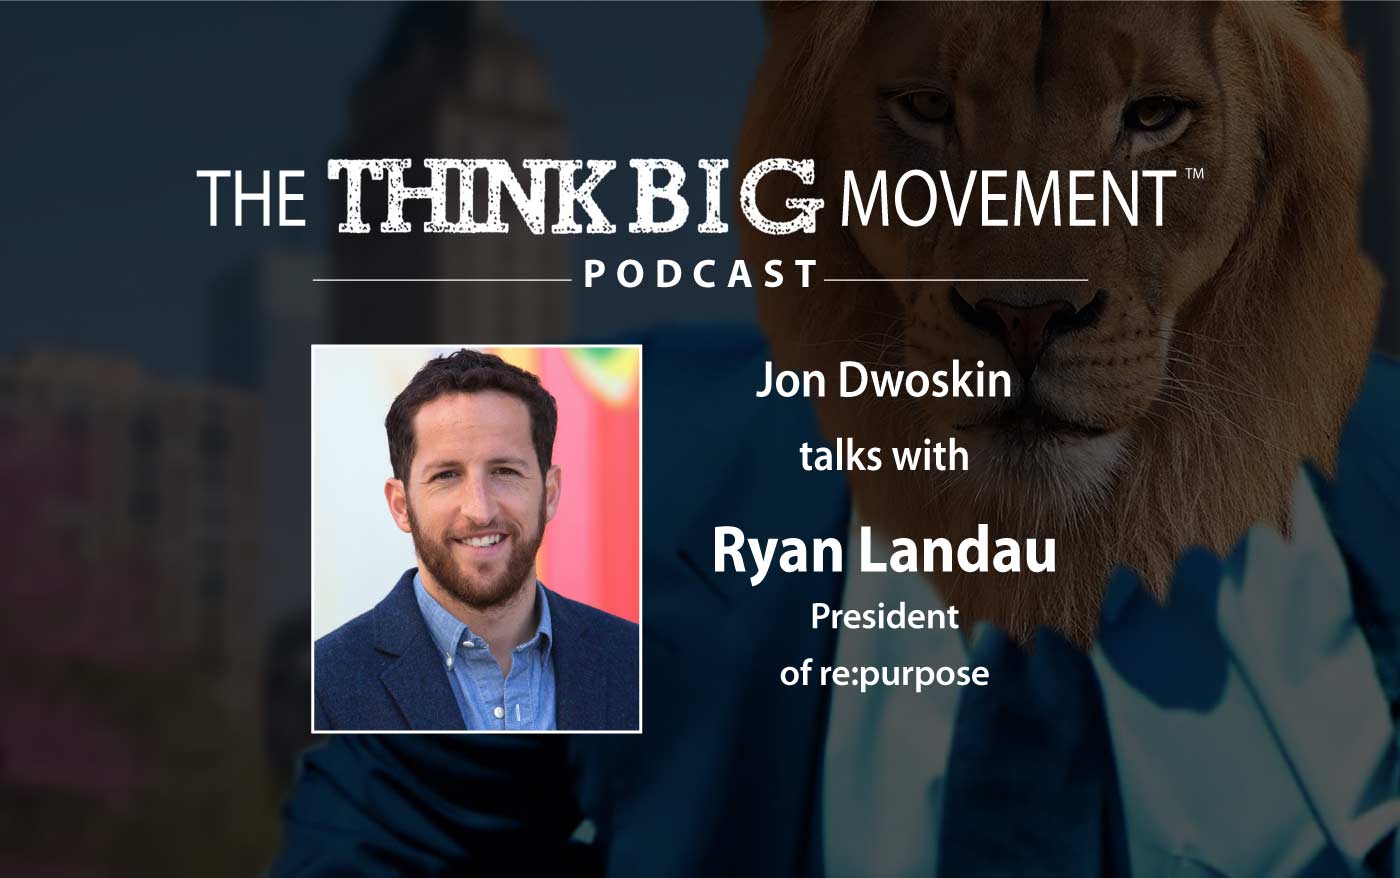 Think Big Movement Podcast - Jon Dwoskin Interviews Ryan Landau, President of President of re:purpose